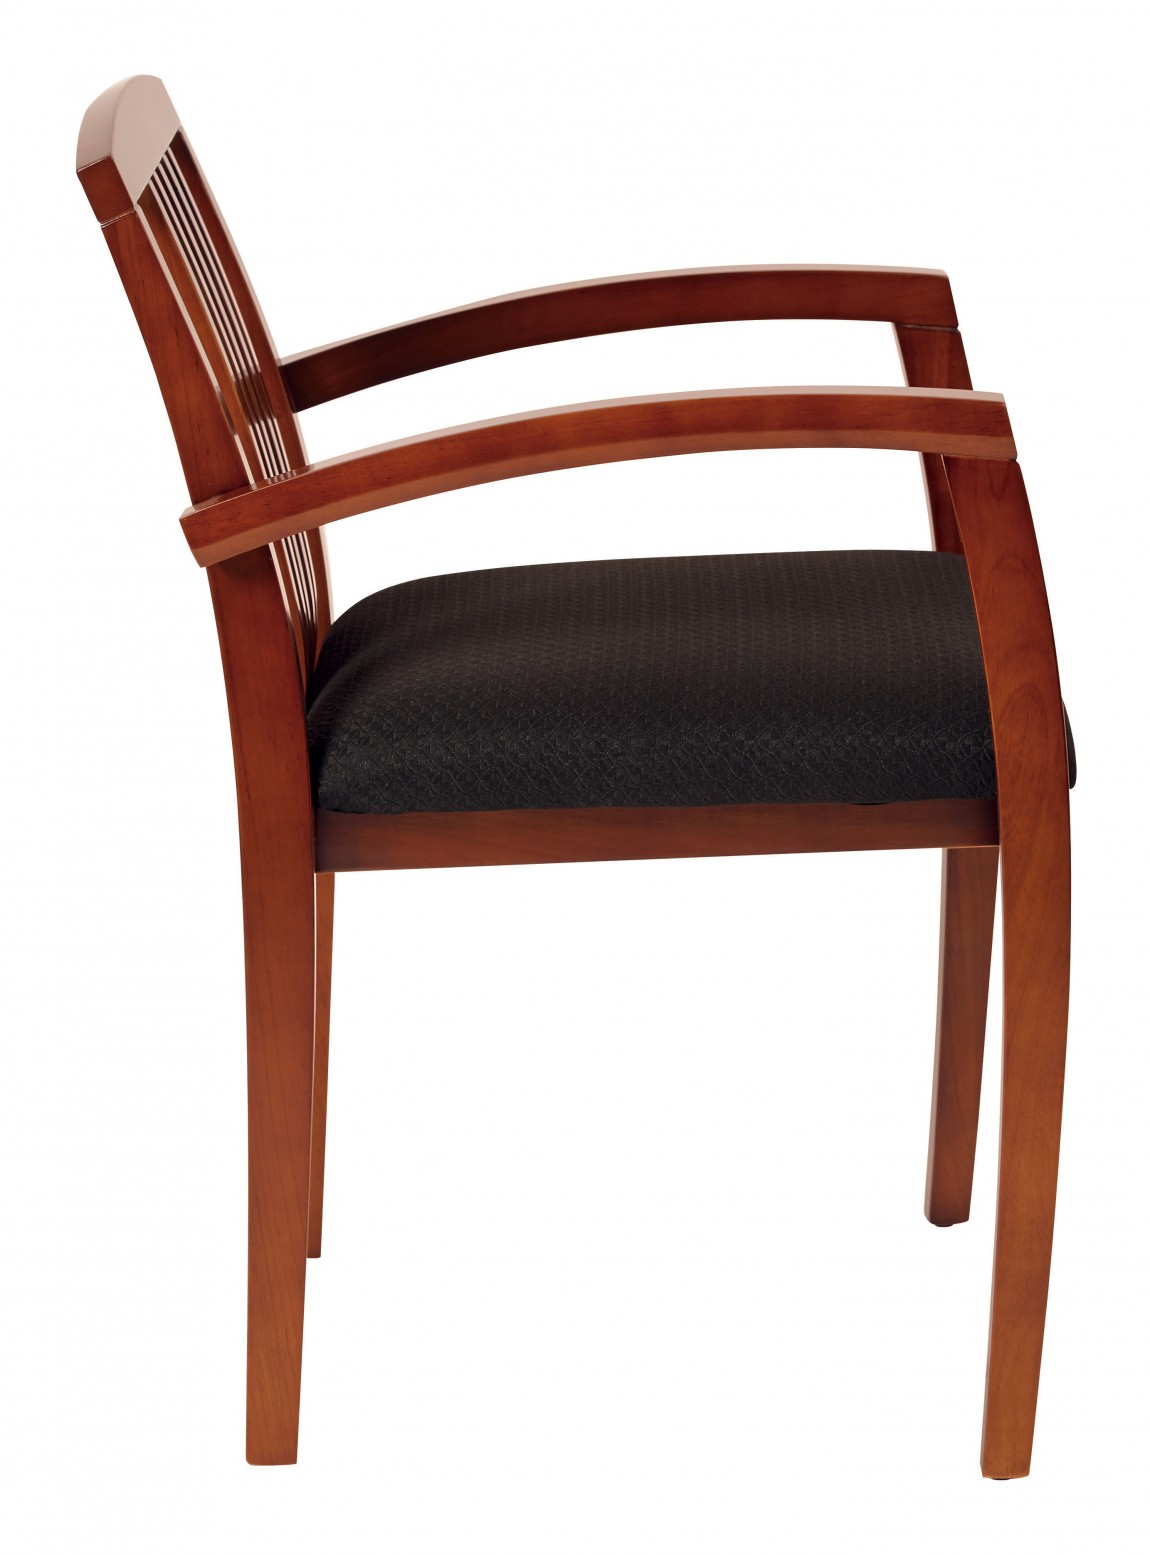 Hardwood Reception Chair - Set of Four